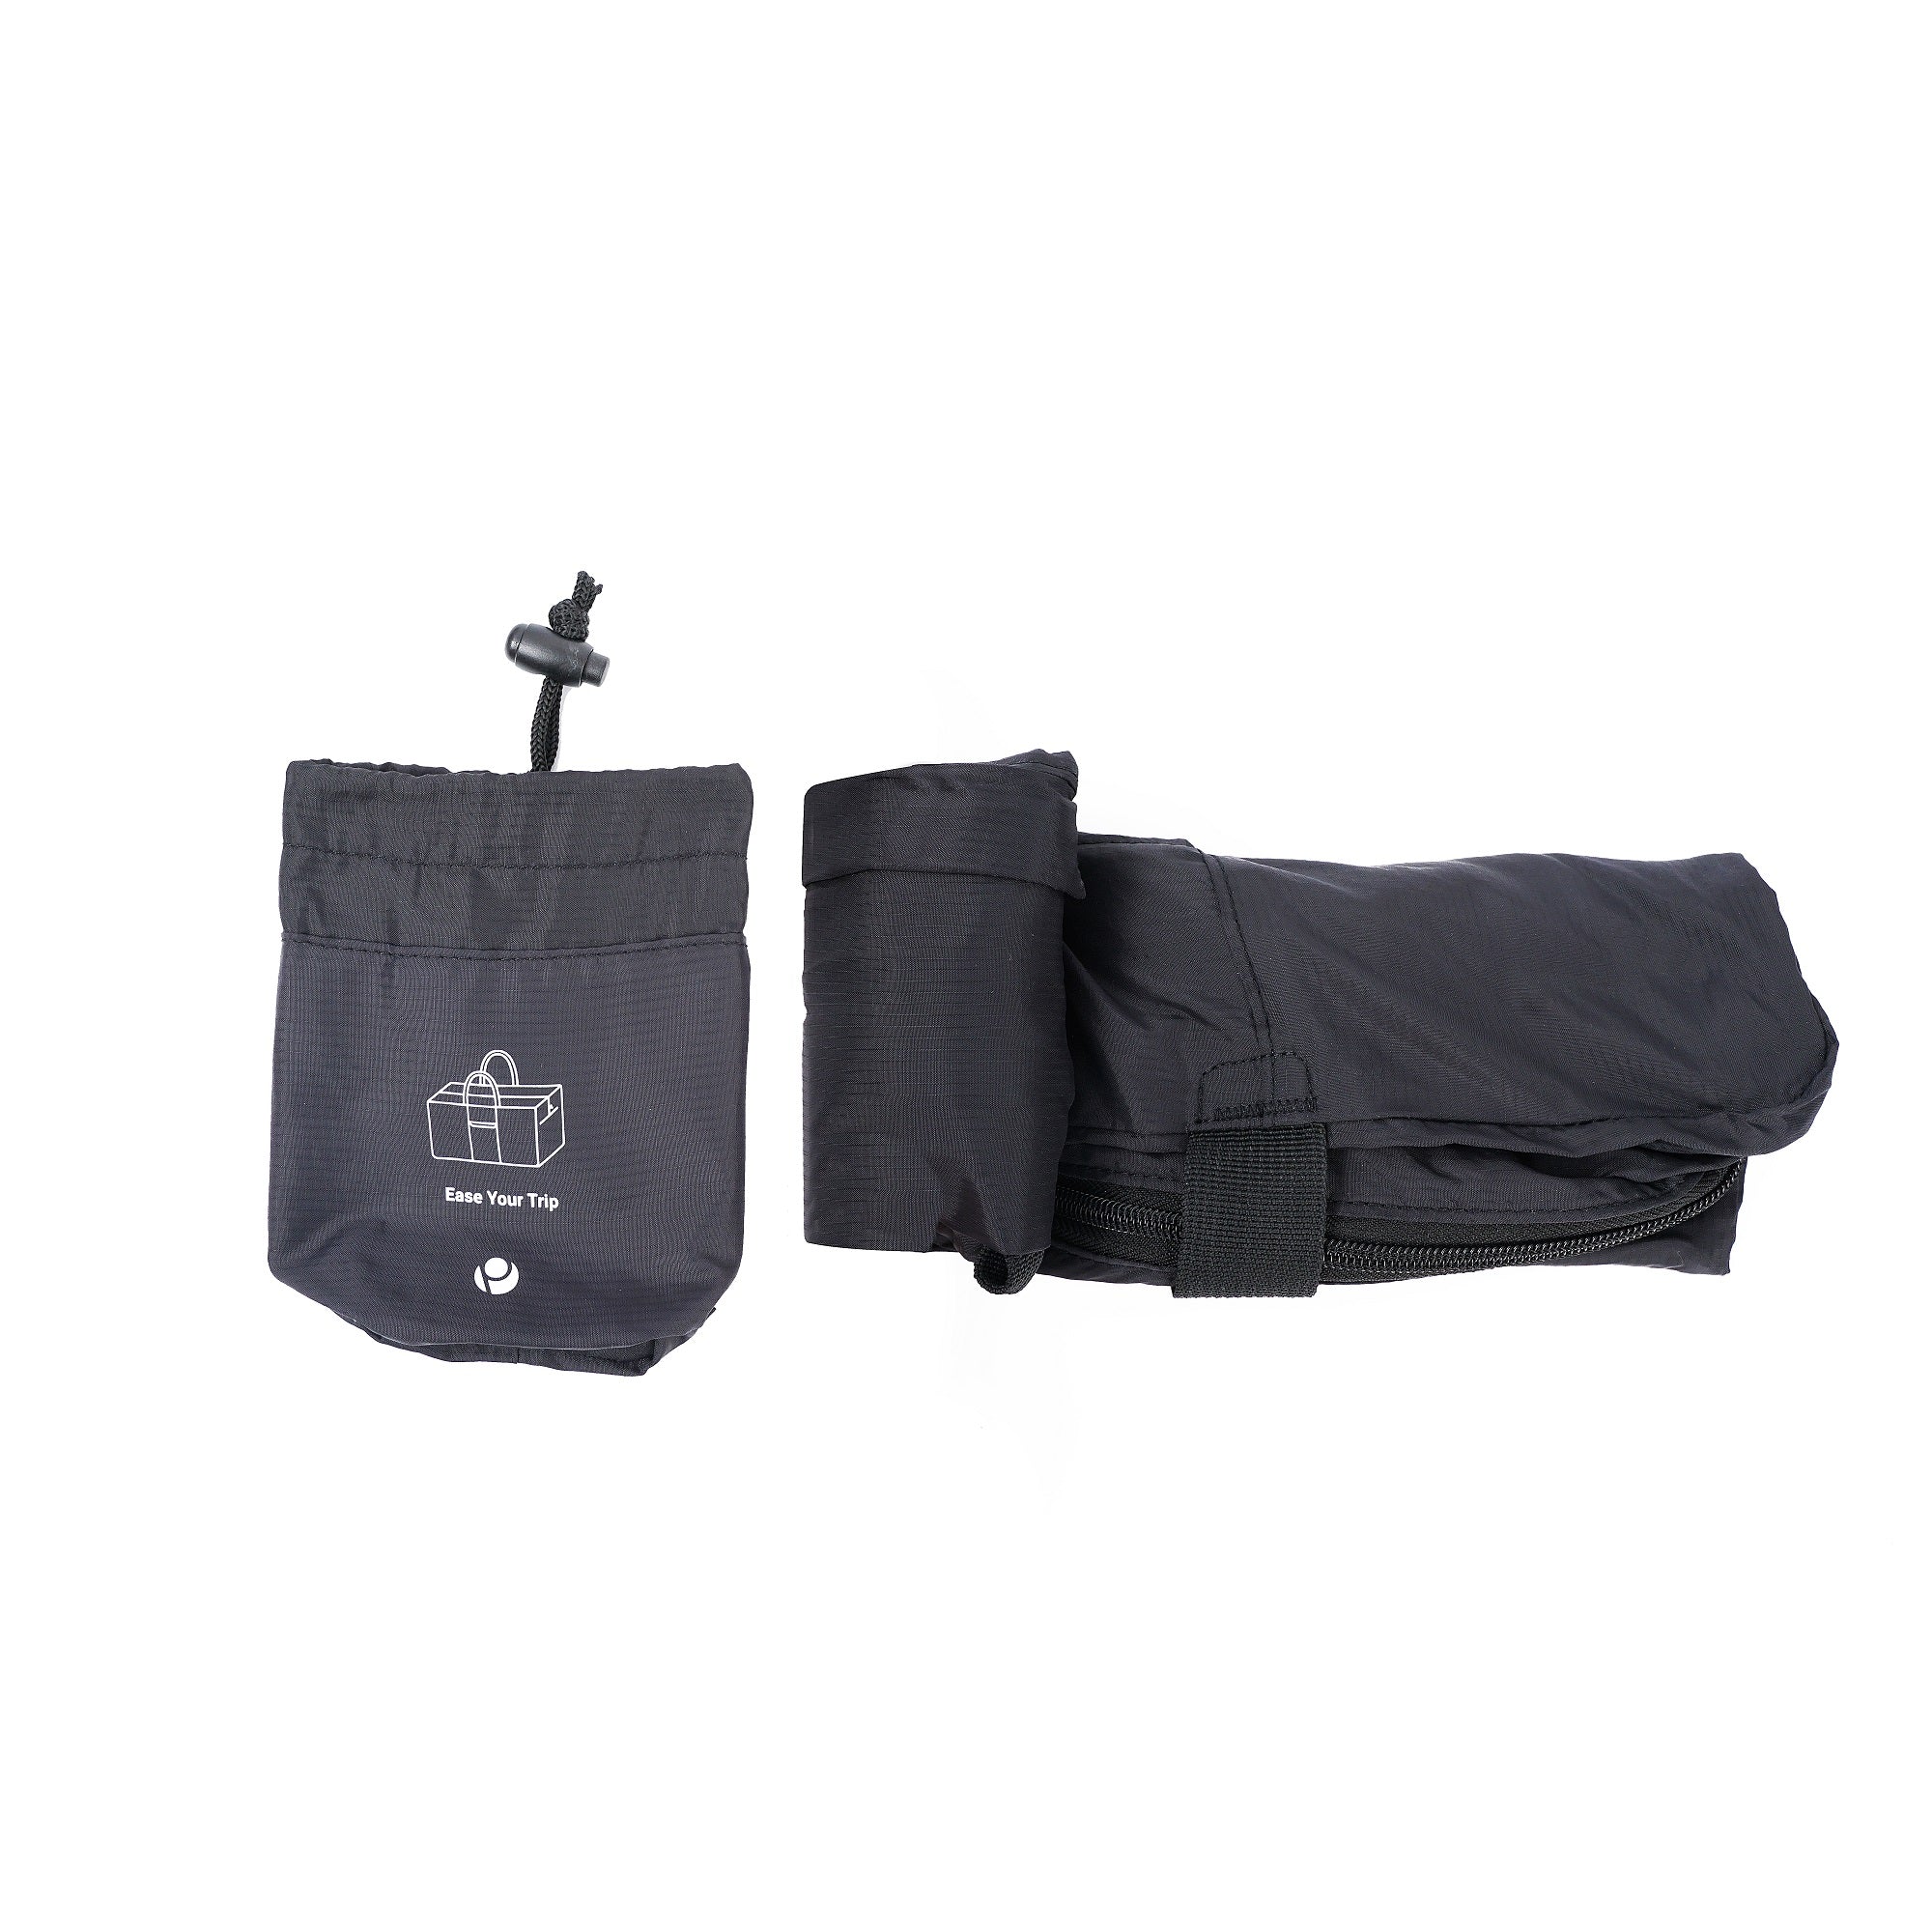 Black Foldable travel bag fabric